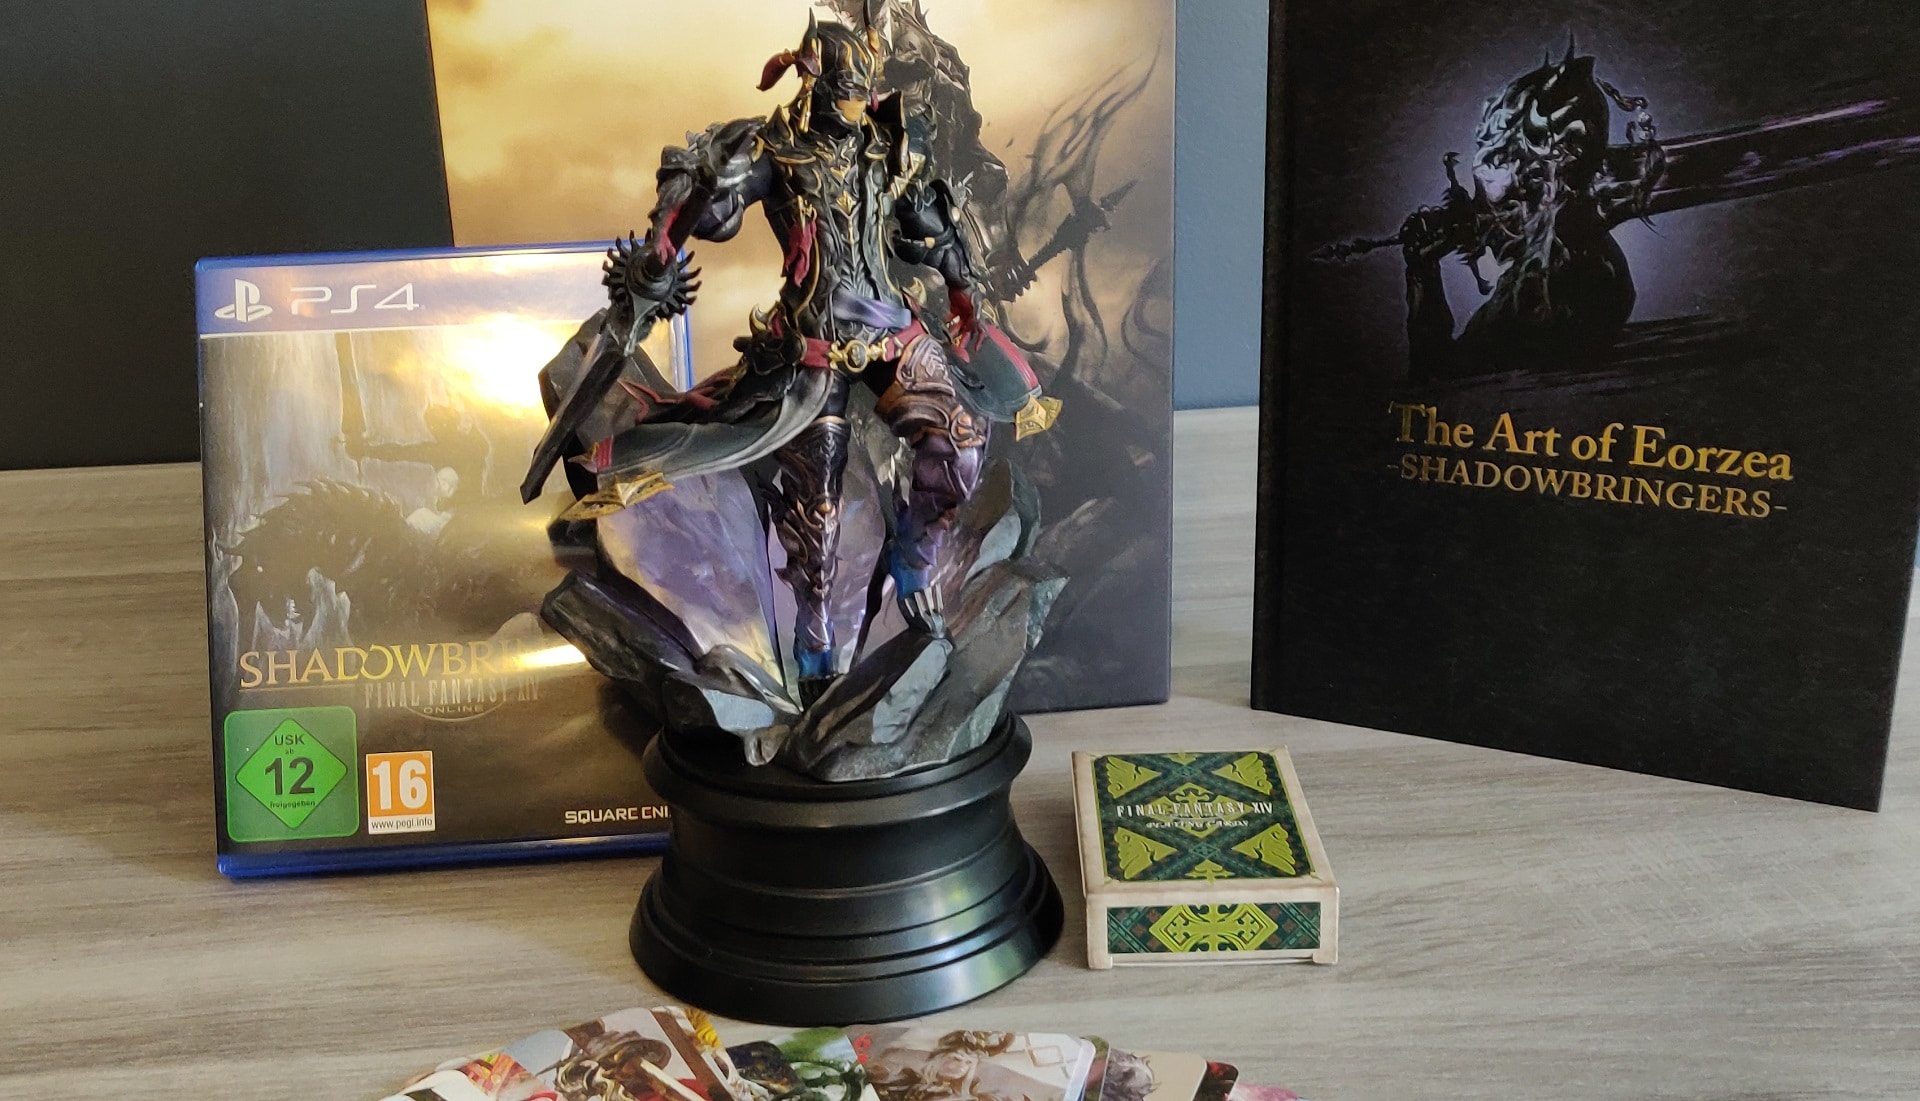 Final fantasy xiv : unboxing de l'édition collector de shadowbringers